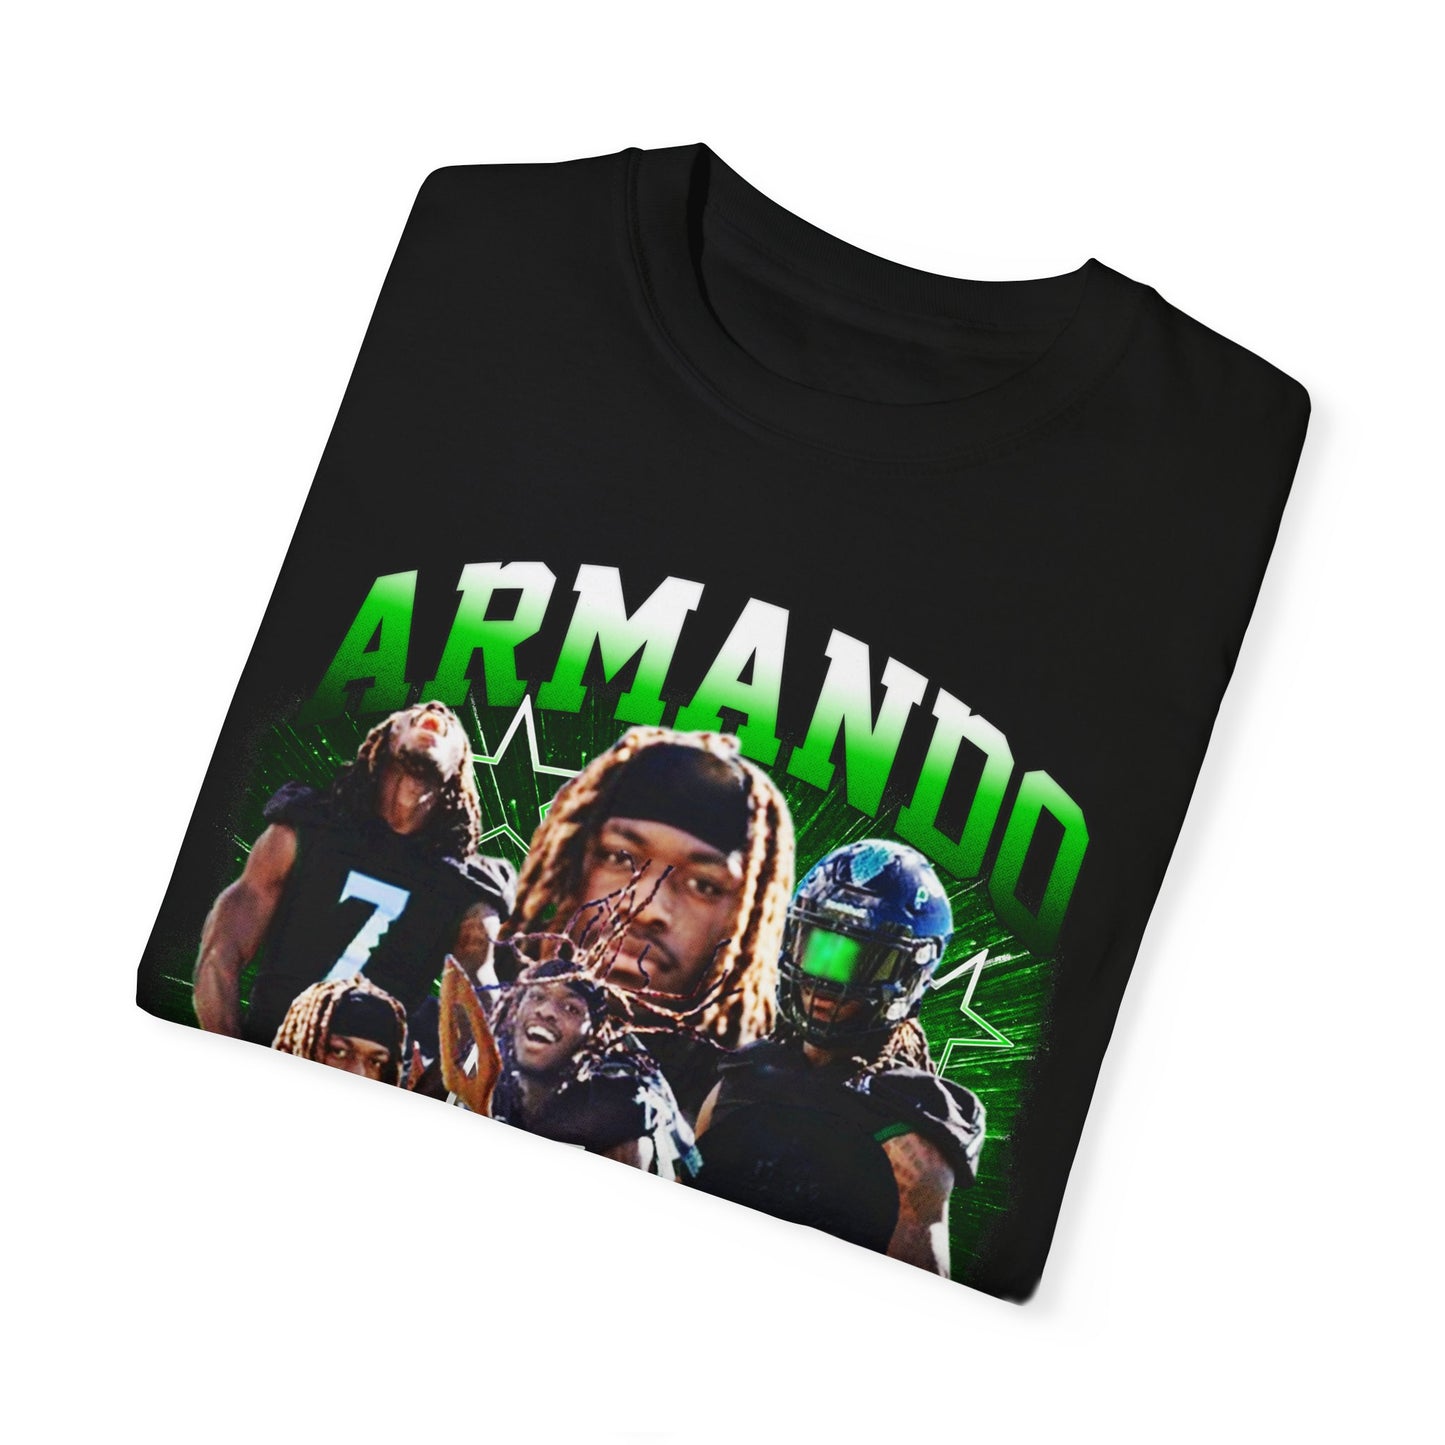 Armando Emmanuel Lewis Jr Graphic T-shirt